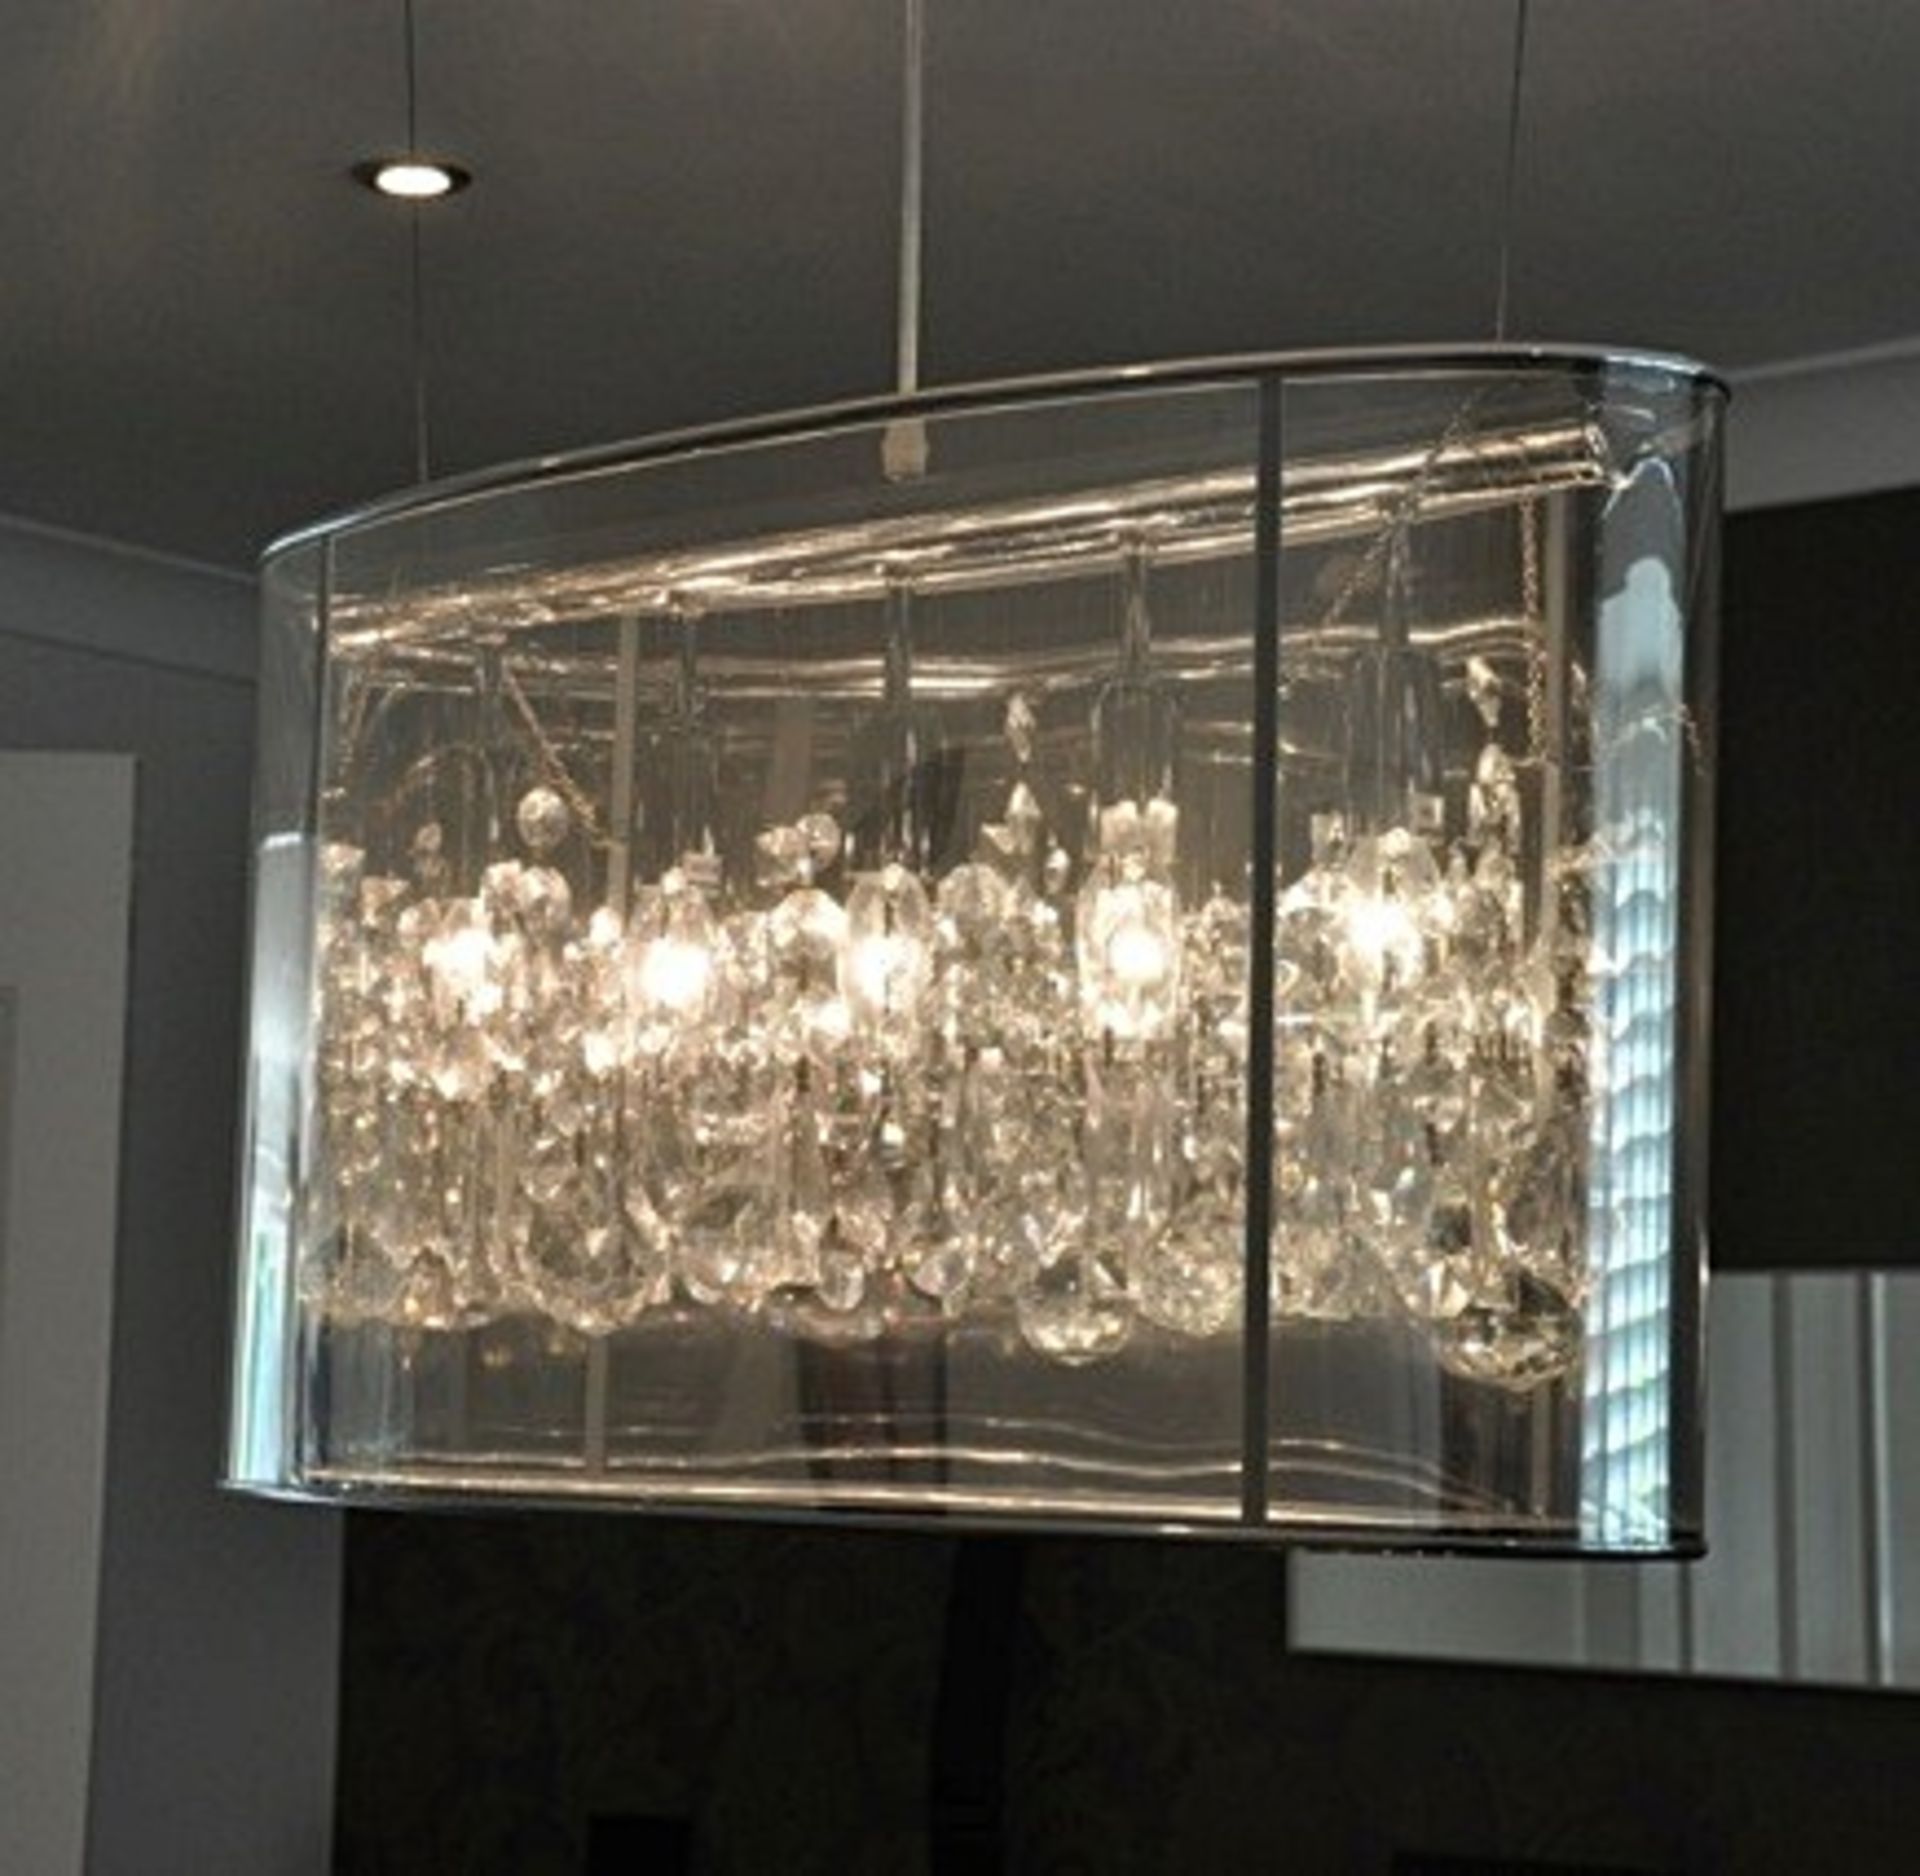 1 x Heals - Modern Crystal Chandelier in oval transparent fitting 61cm x 35cm x diameter approx 24 x